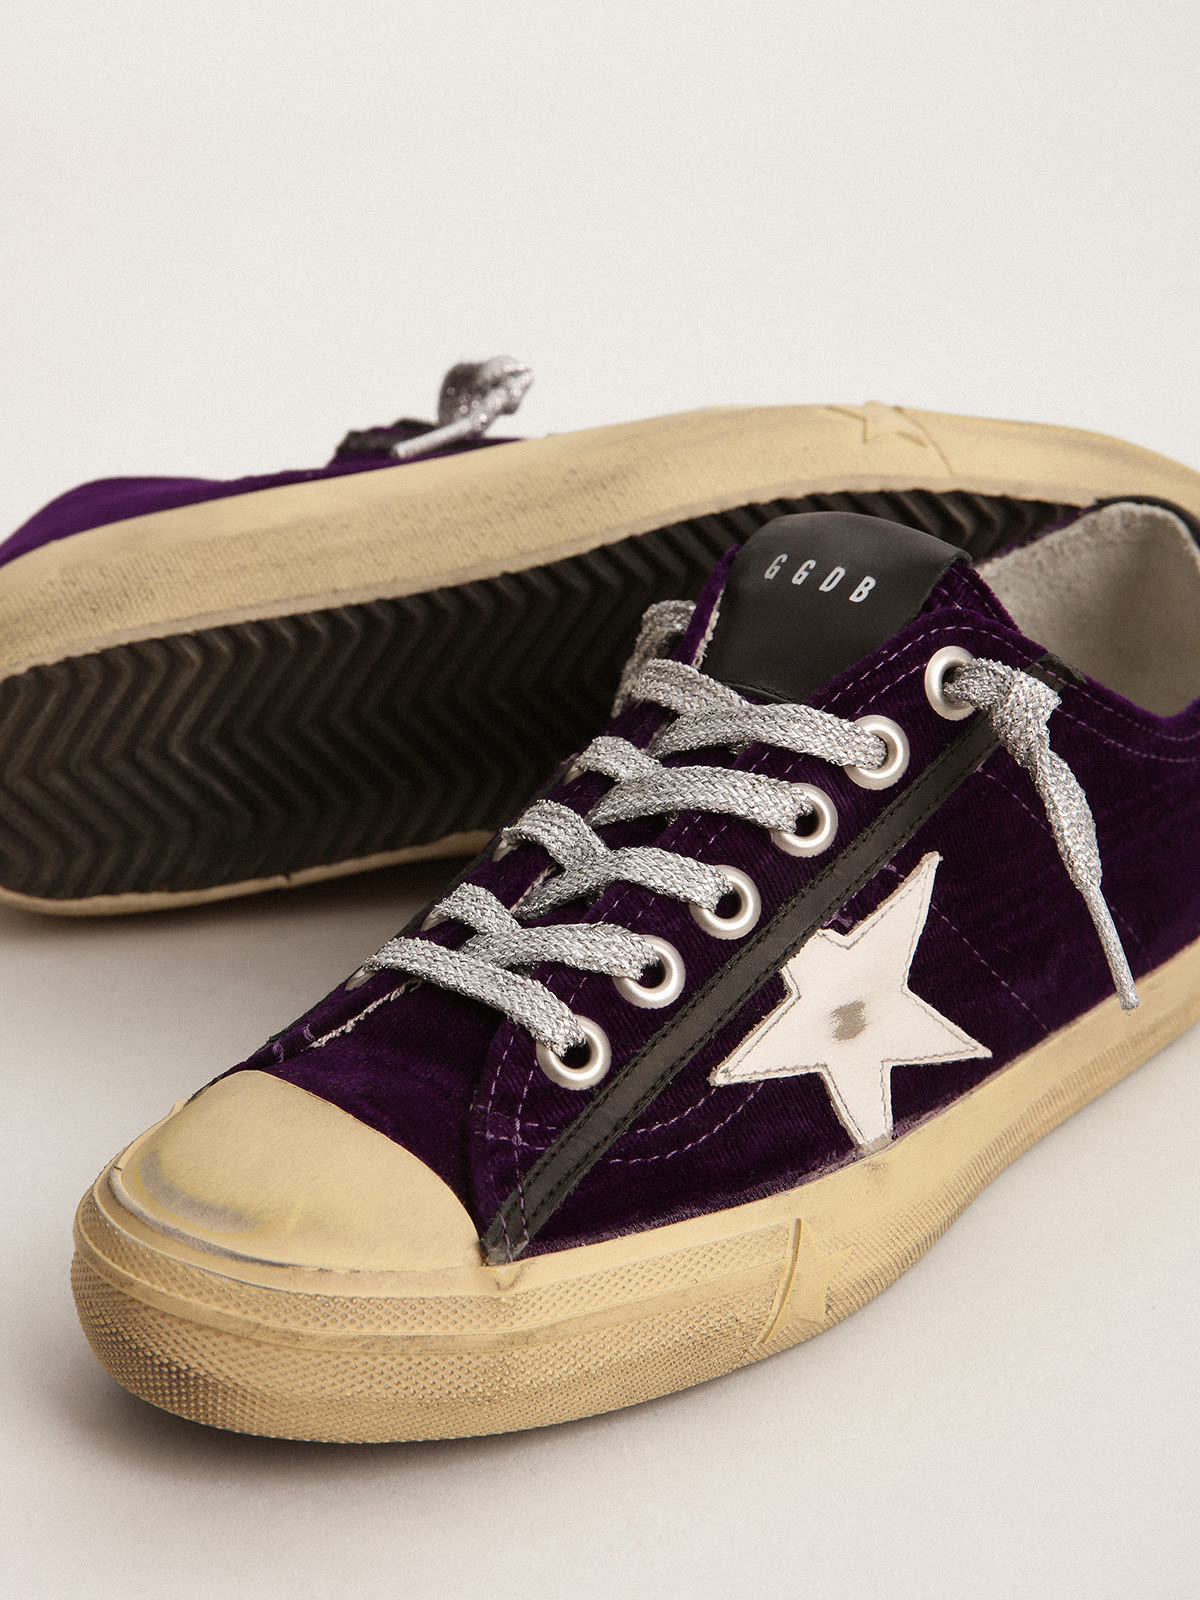 Golden Goose - V-star LTD sneakers in purple velvet with a white leather star in 